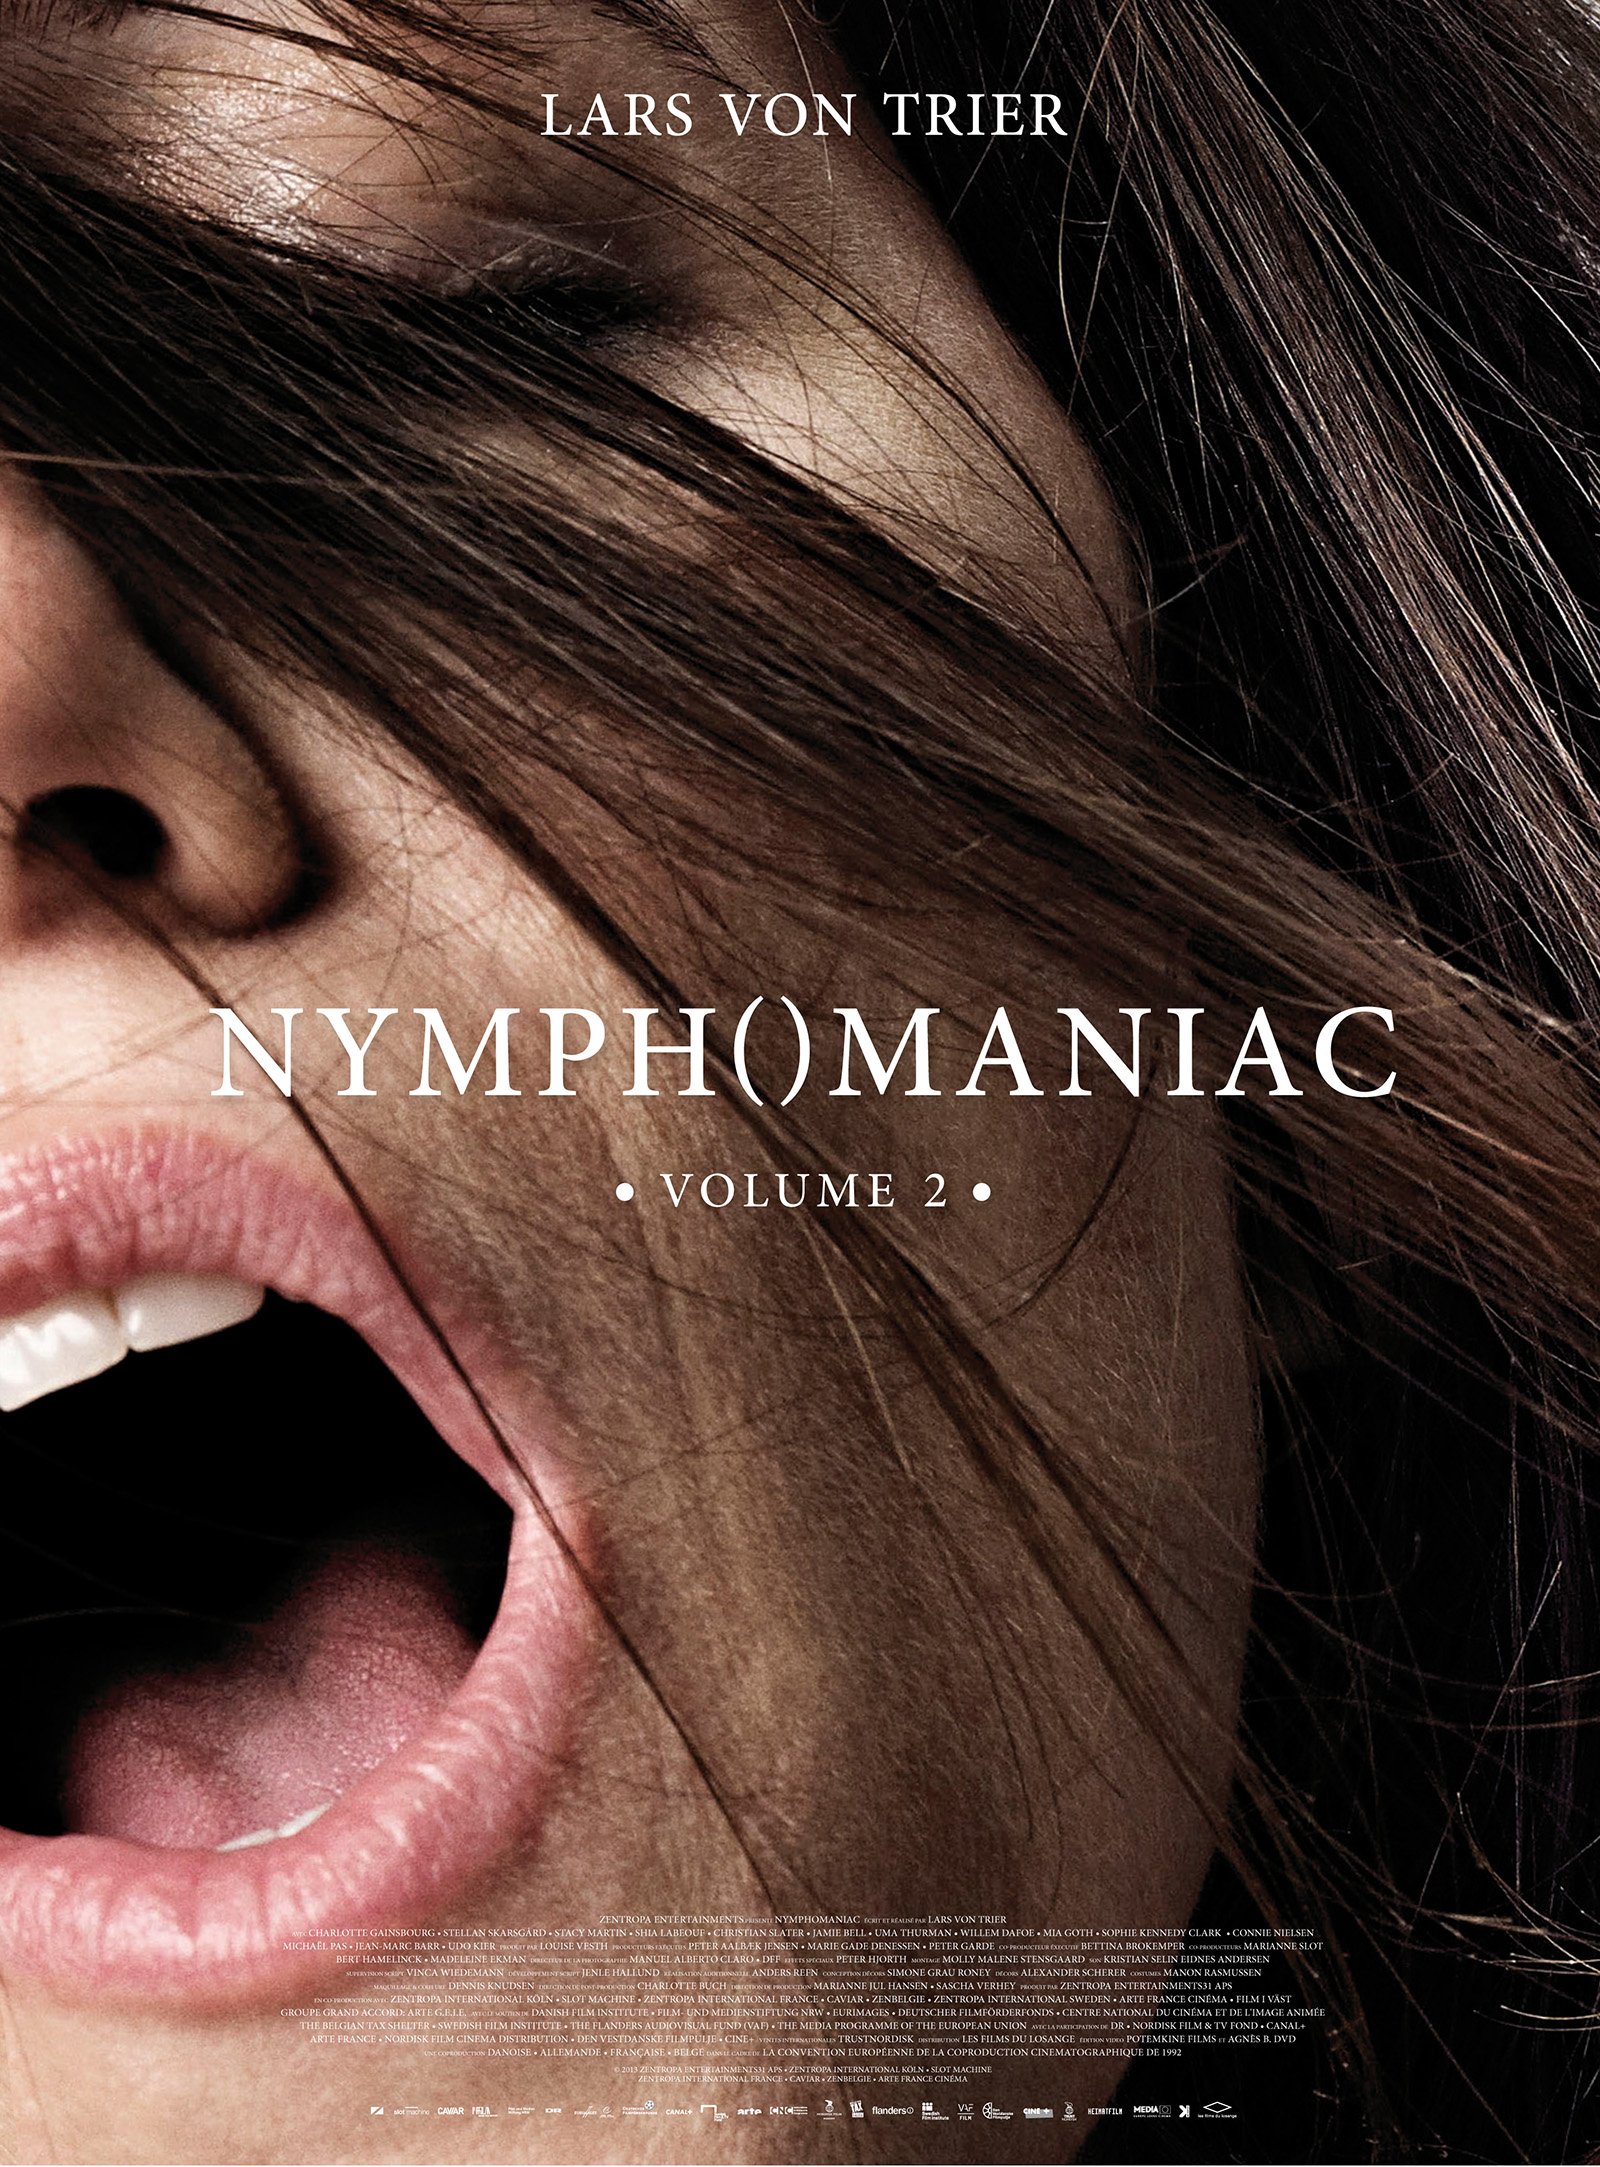 Nymphomaniac - Volume 2 - film 2013 image photo